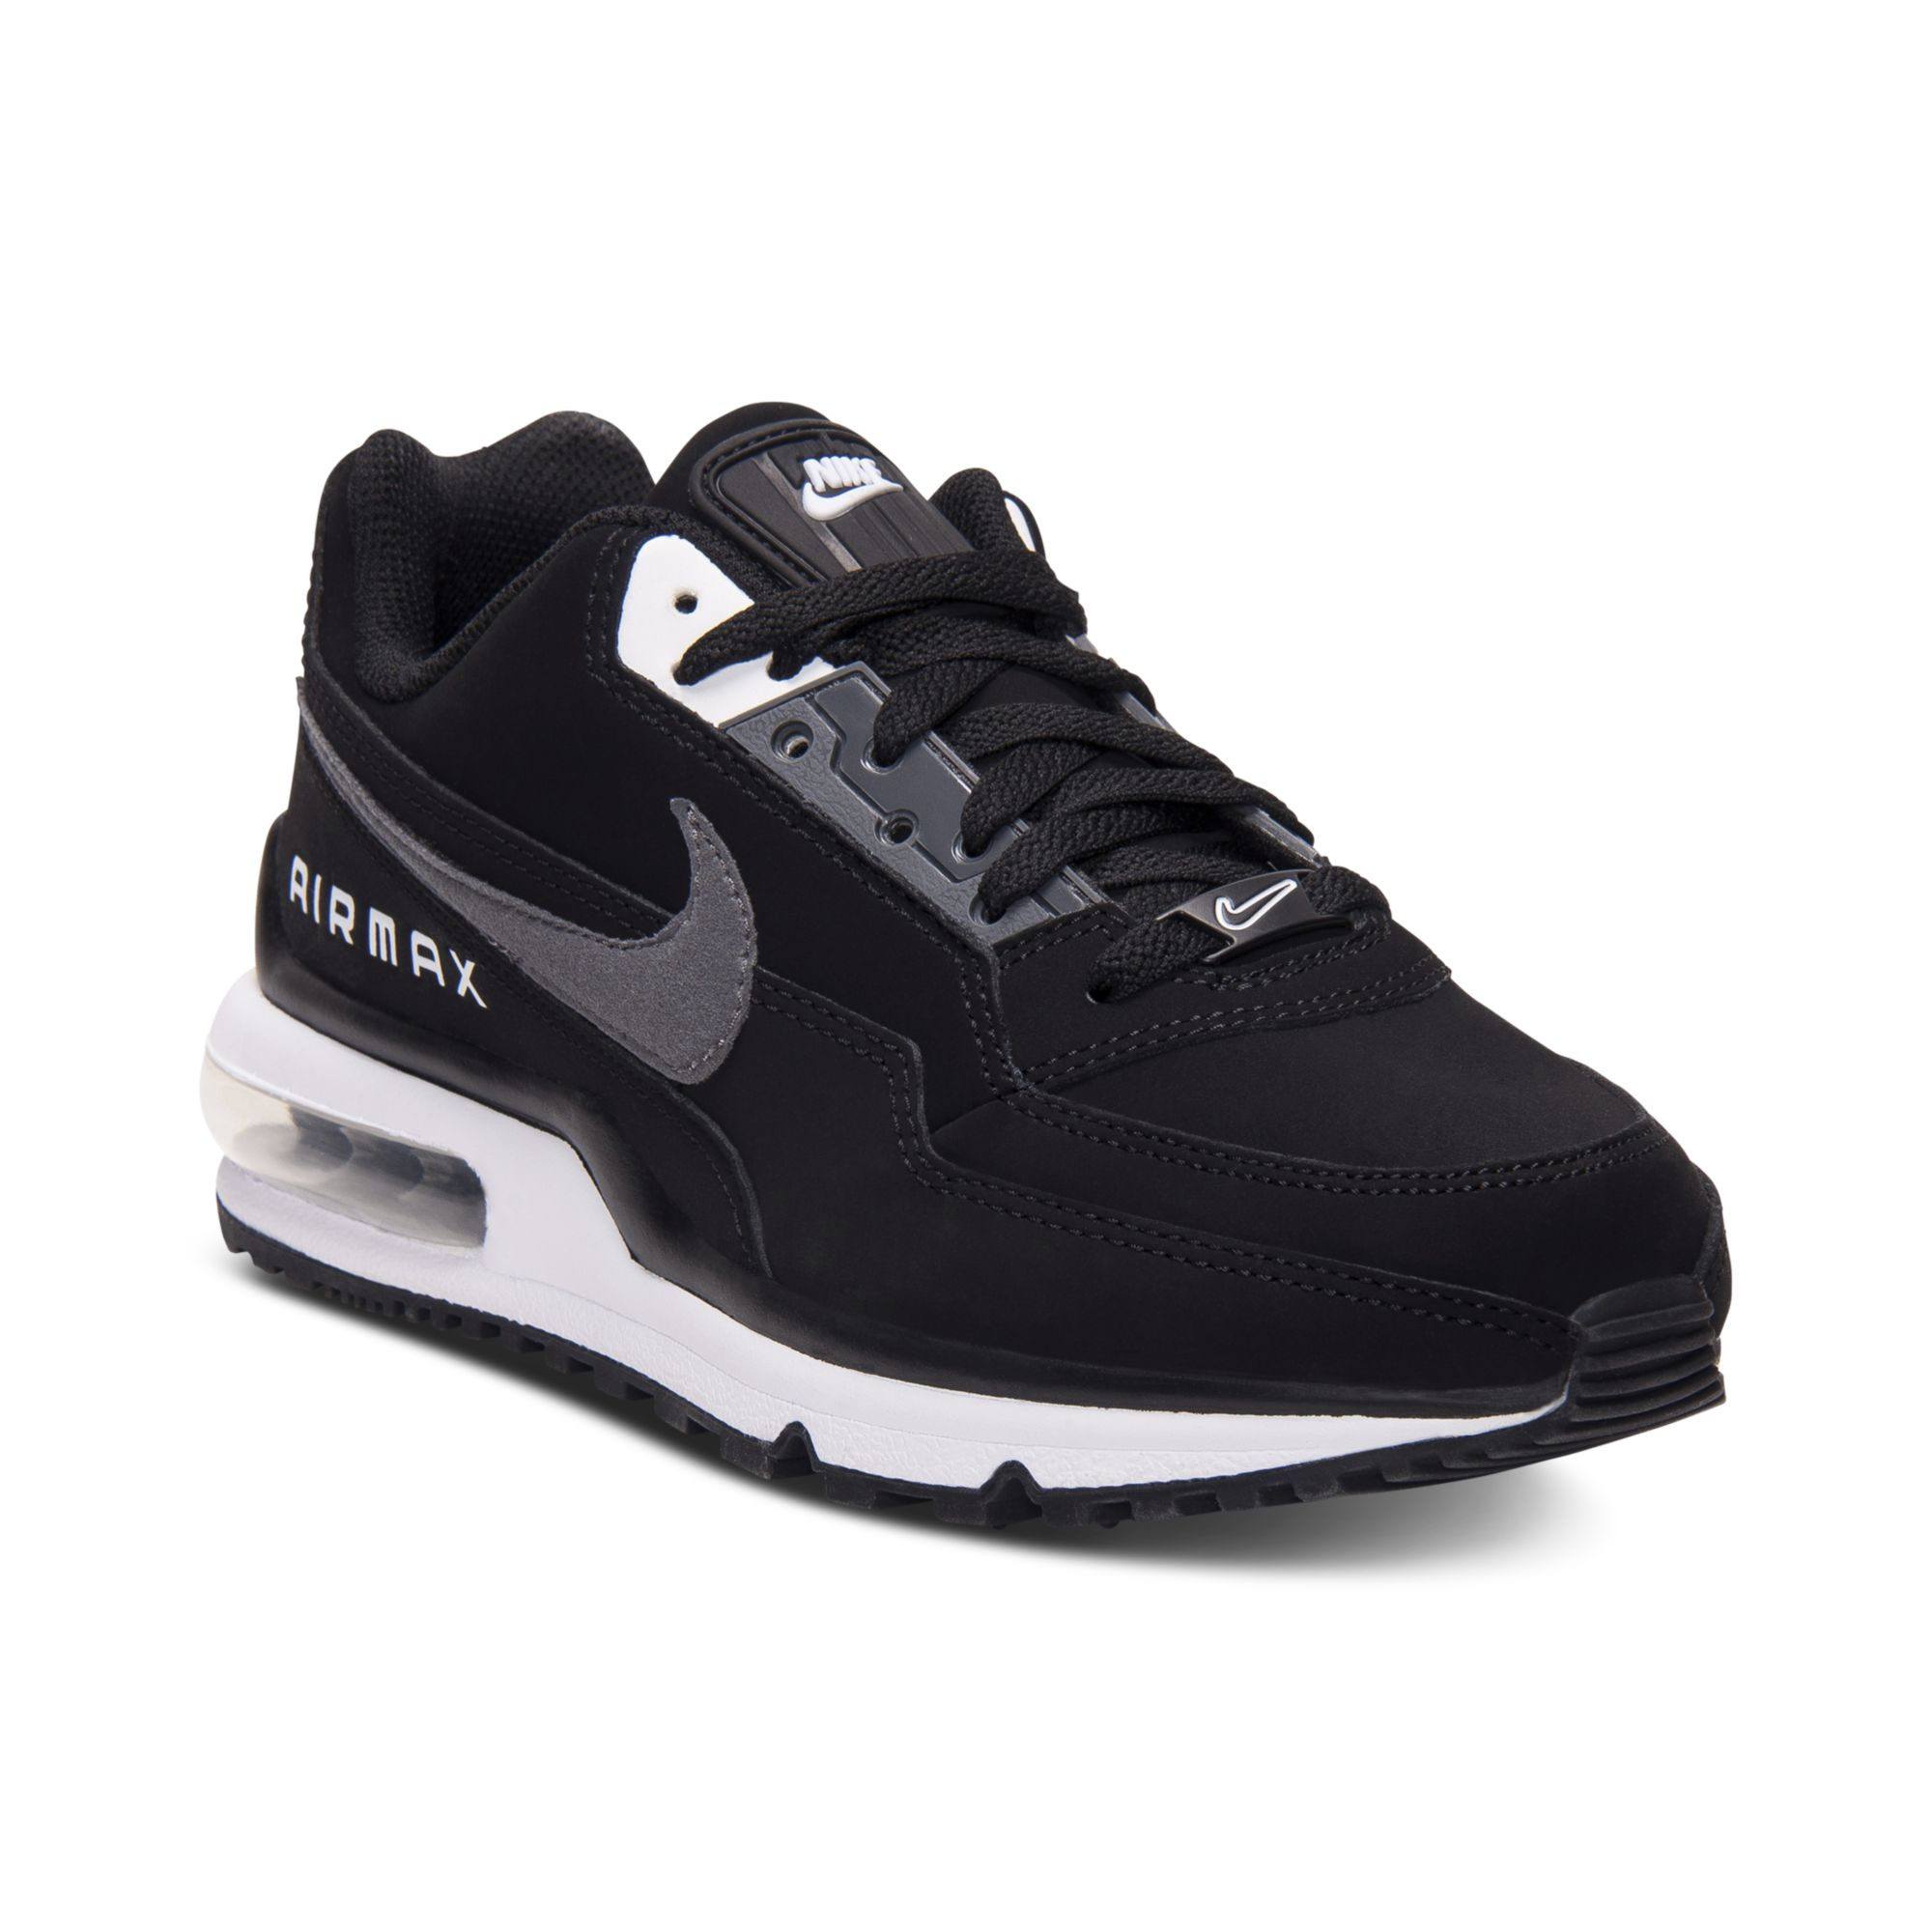 Nike Air Max Ltd Running Sneakers in Black/White/Dark Grey (Black) for Men - Lyst